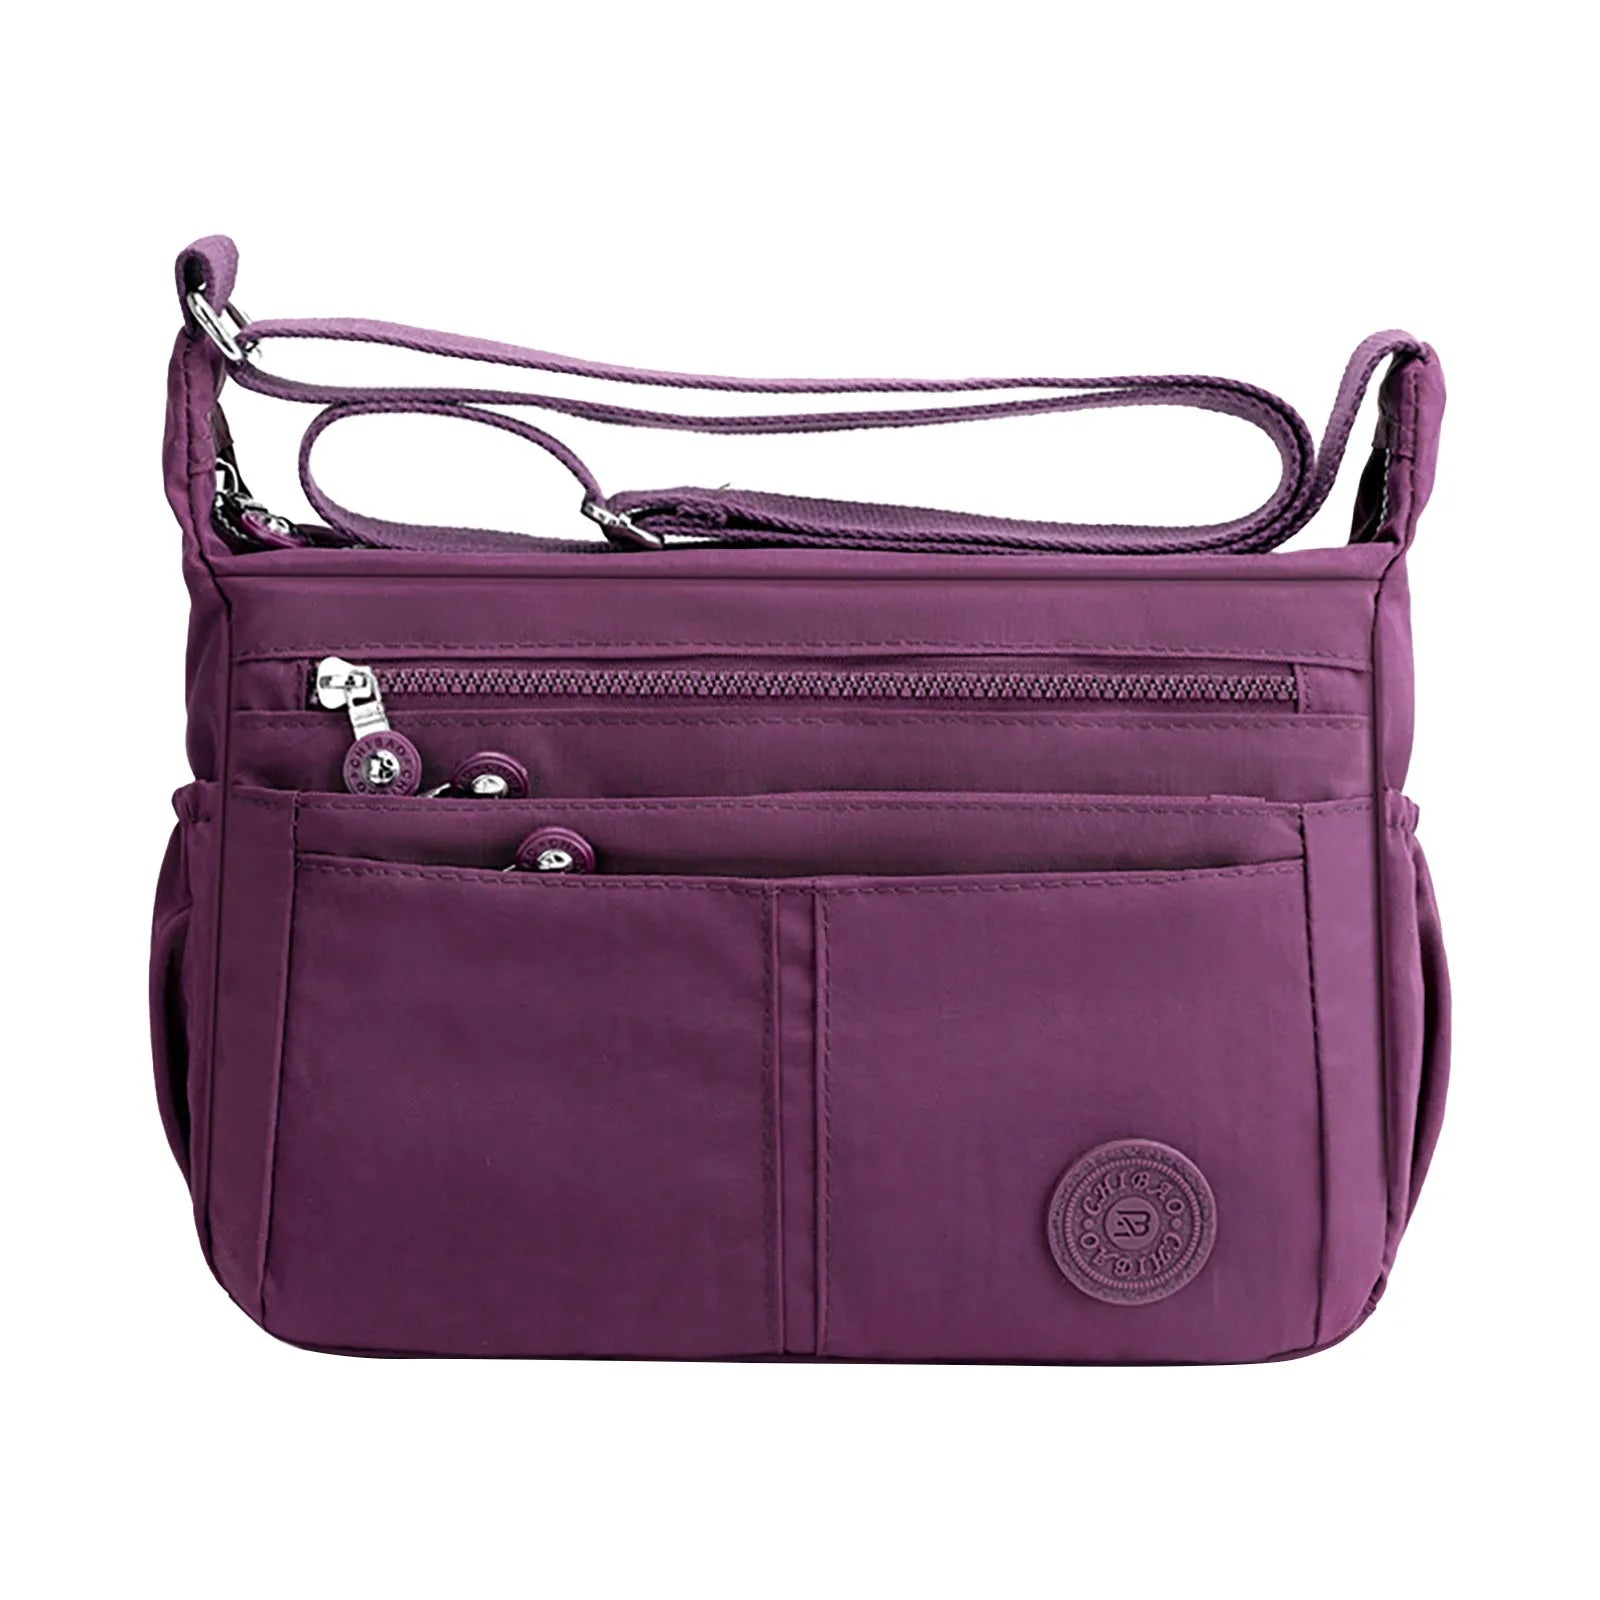 Nylon Cloth Bag One Shoulder Bag Lightweight Tote - Fashionqueene.com